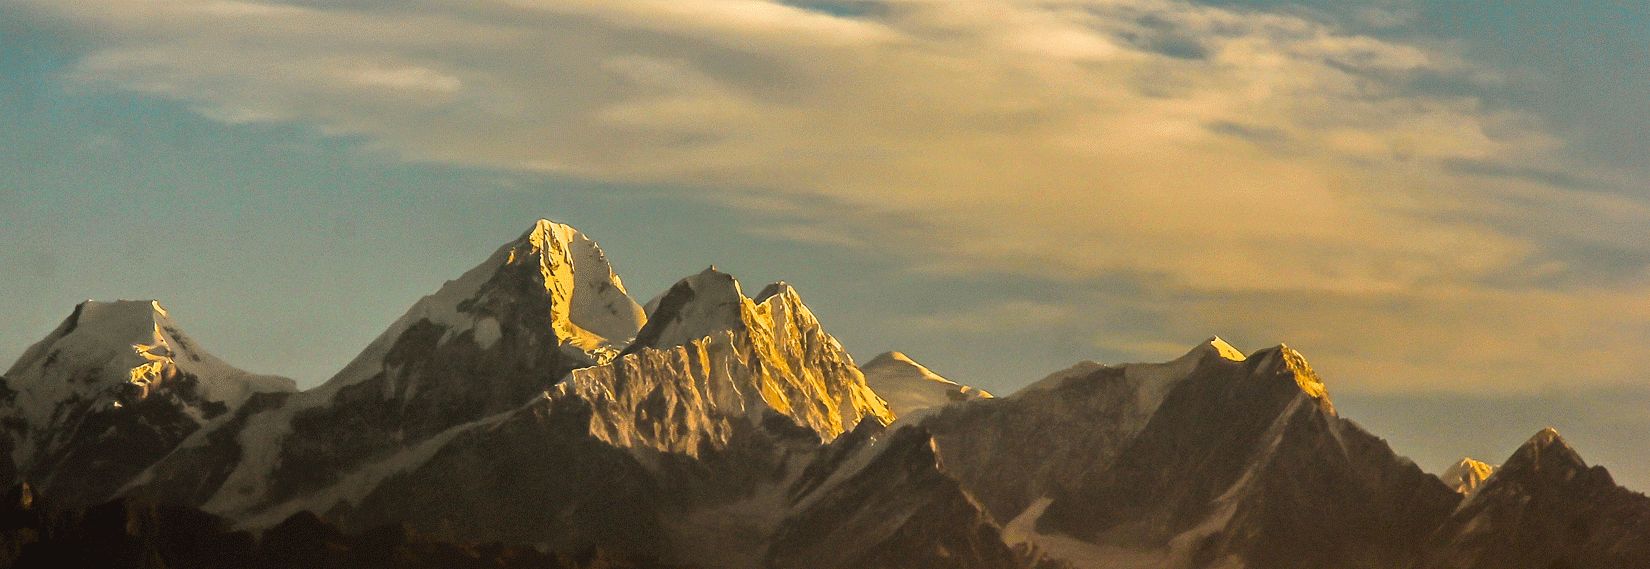 Mountain View from Nagarkot